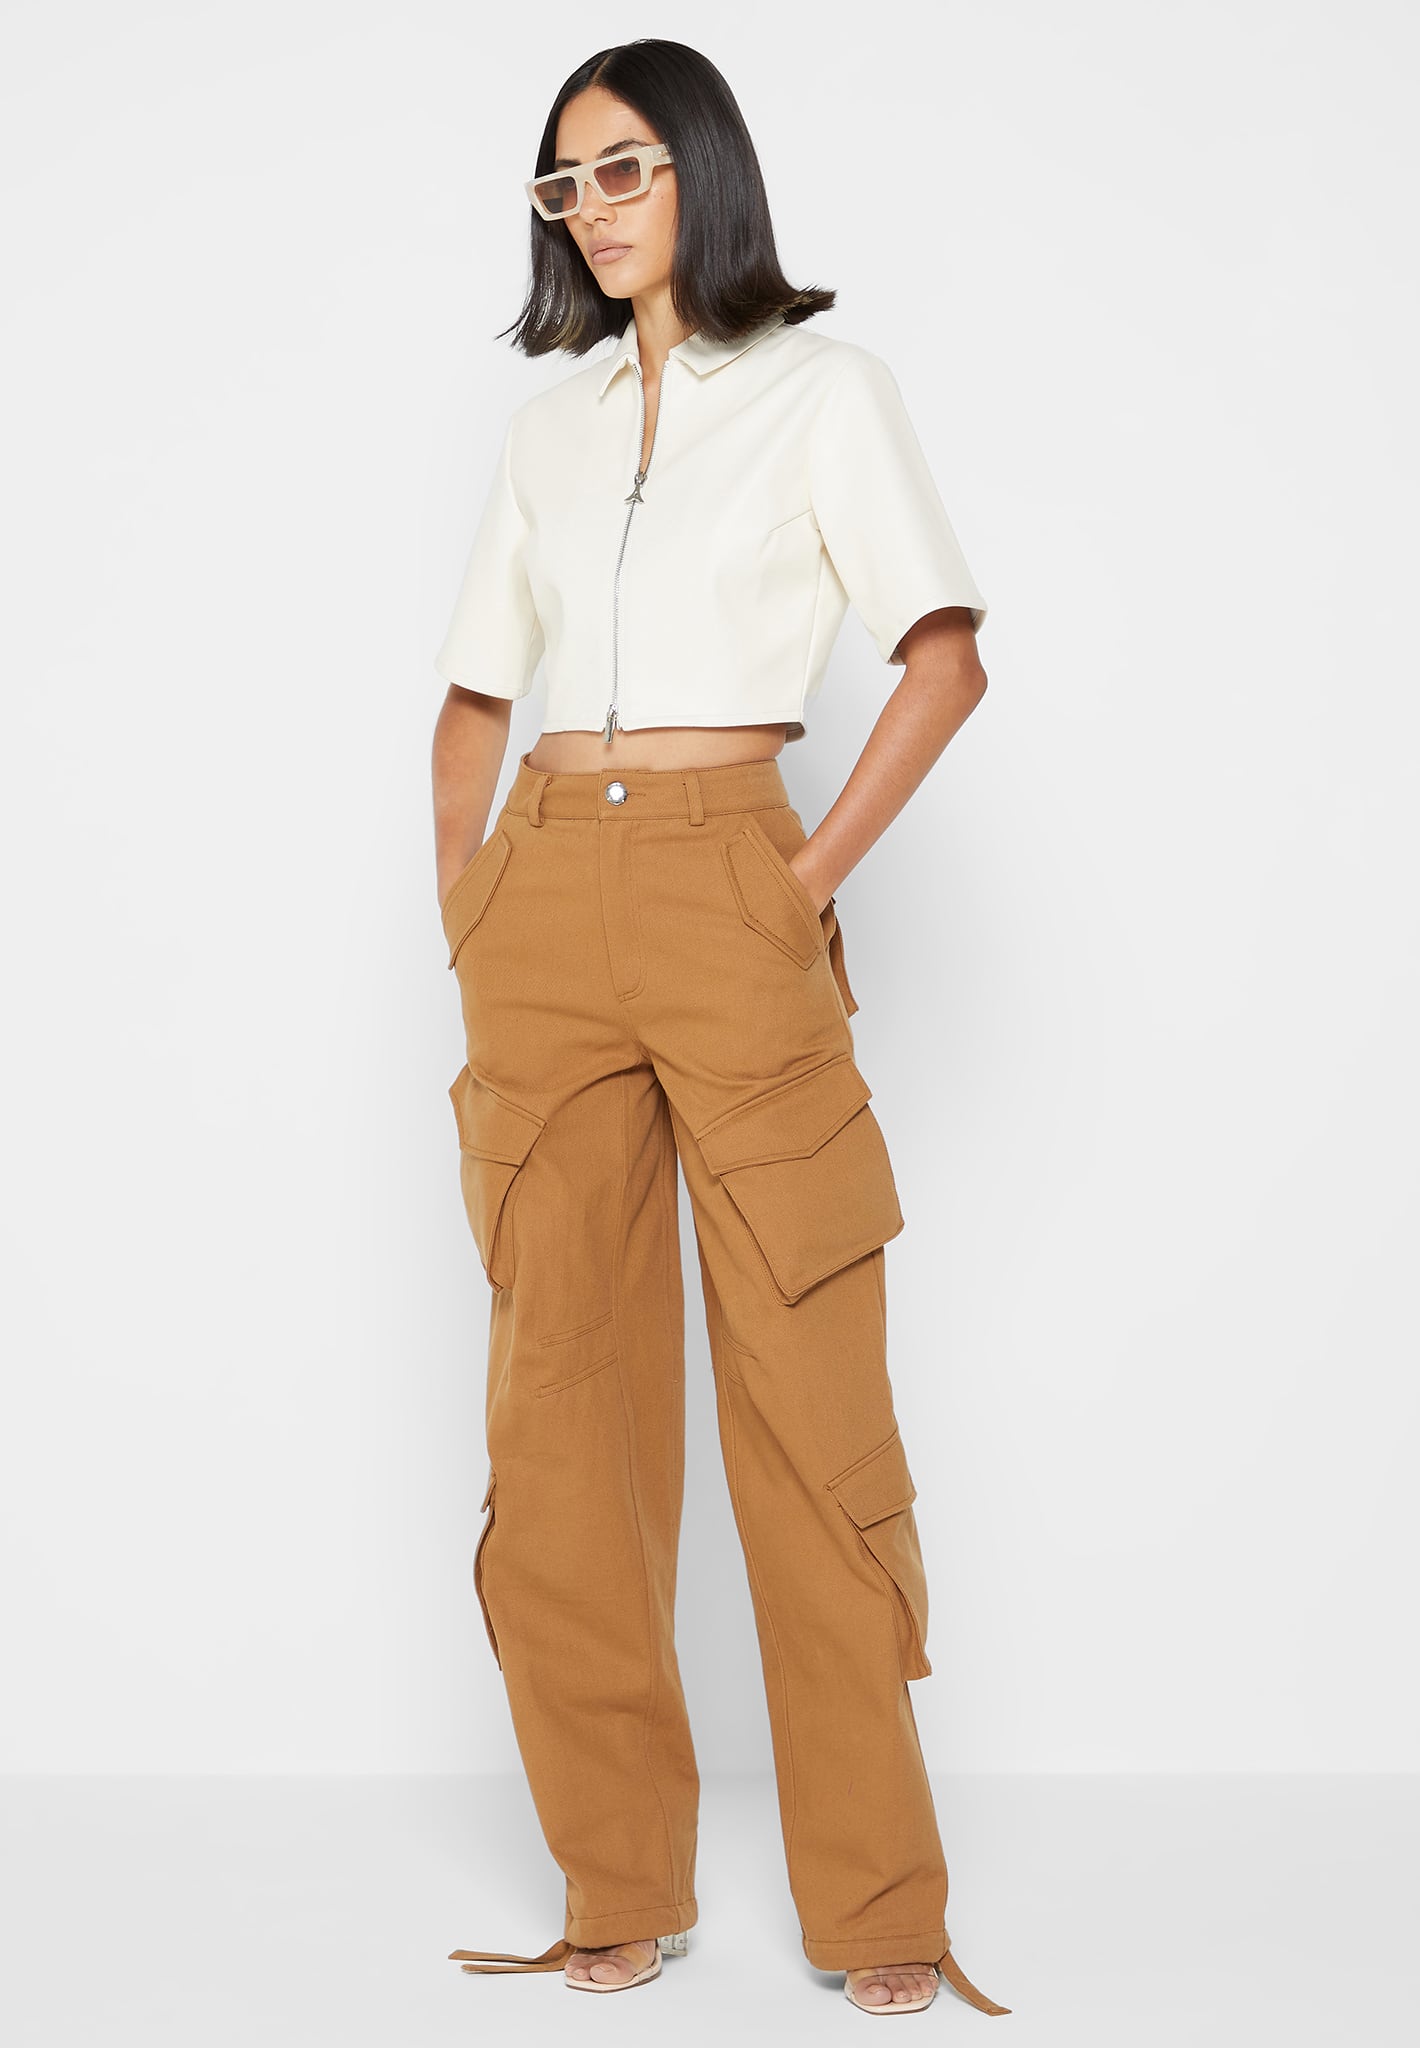 Women's Vintage Solid Color Cargo Pants High Waist Button Down